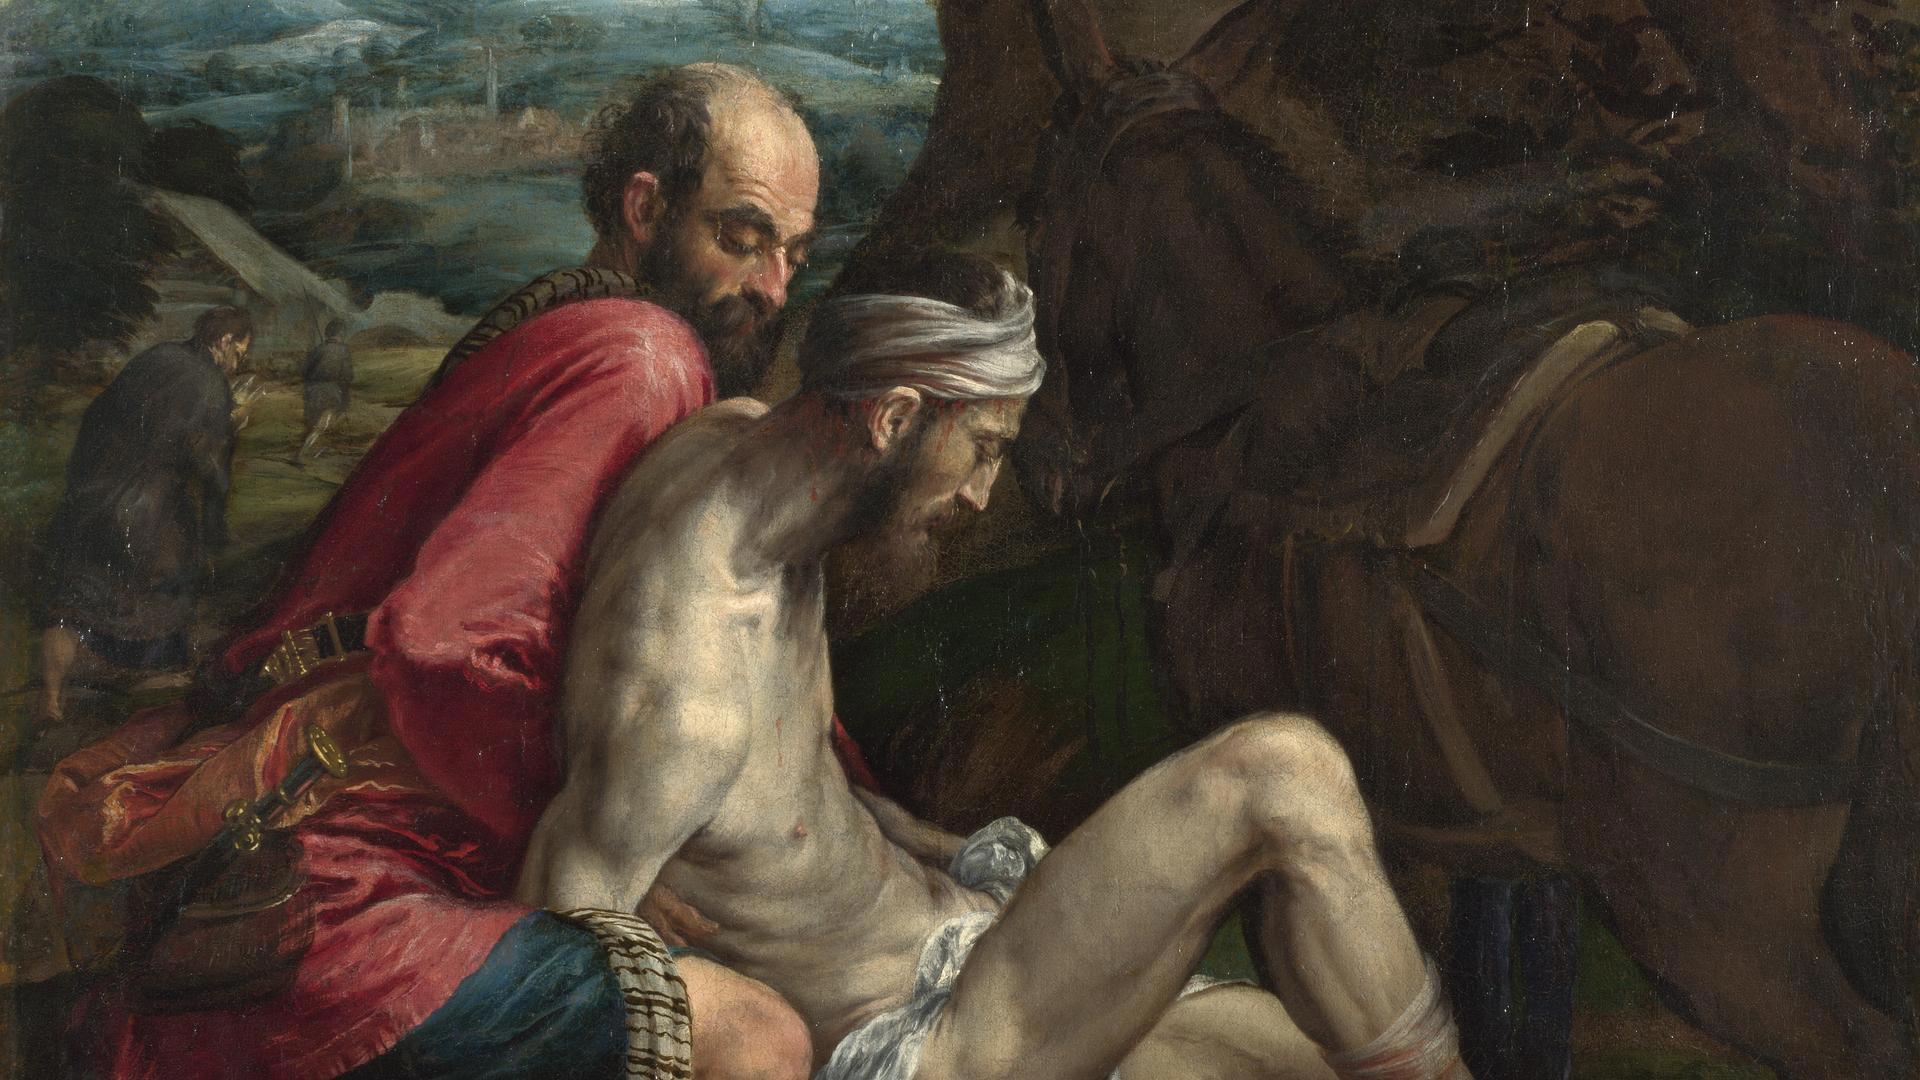 The Good Samaritan by Jacopo Bassano